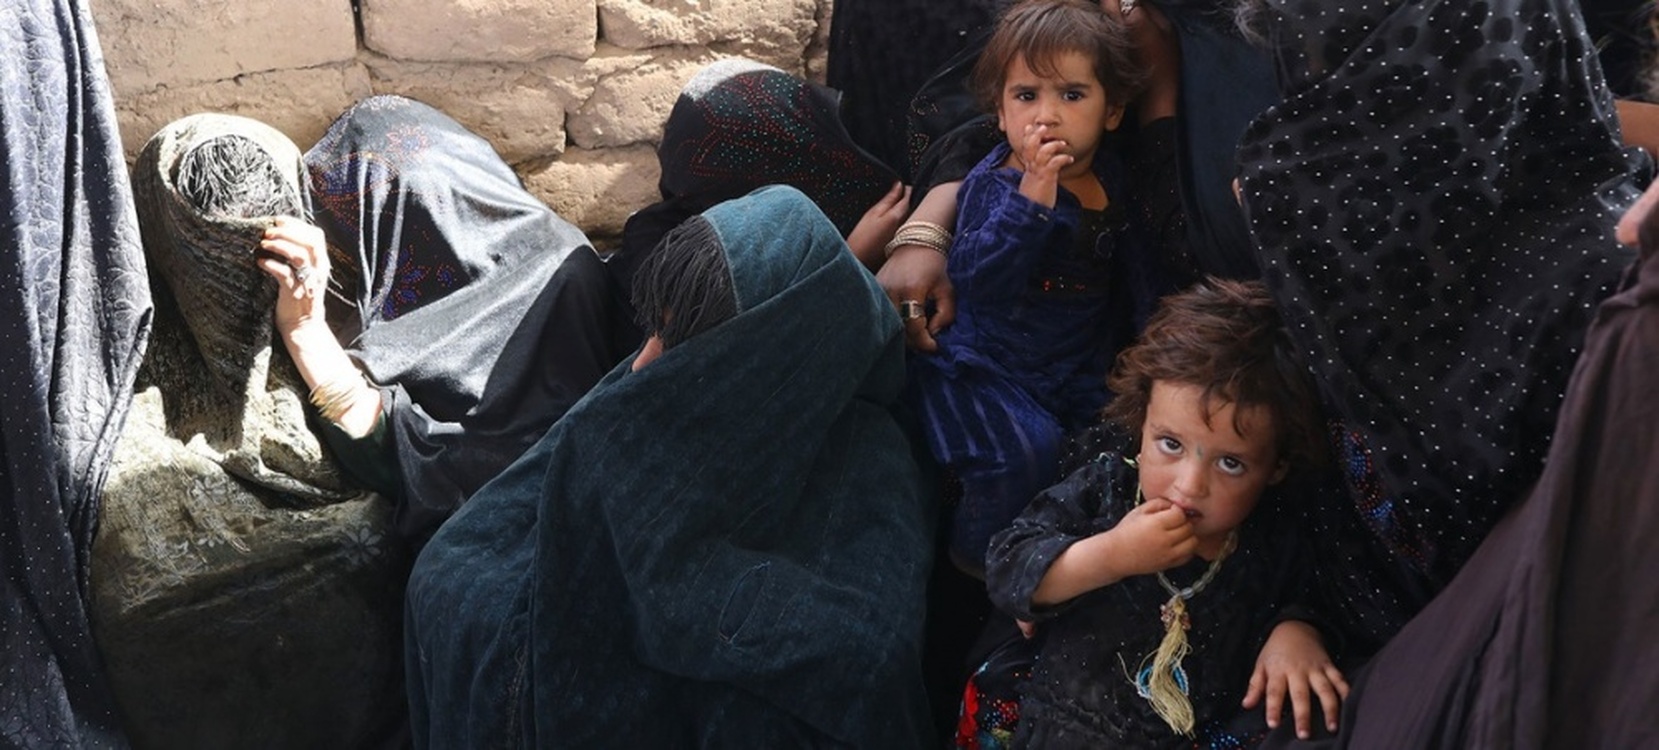 Бедные мусульмане. ООН Афганистан Талибан. Голодающие дети Афганистана.